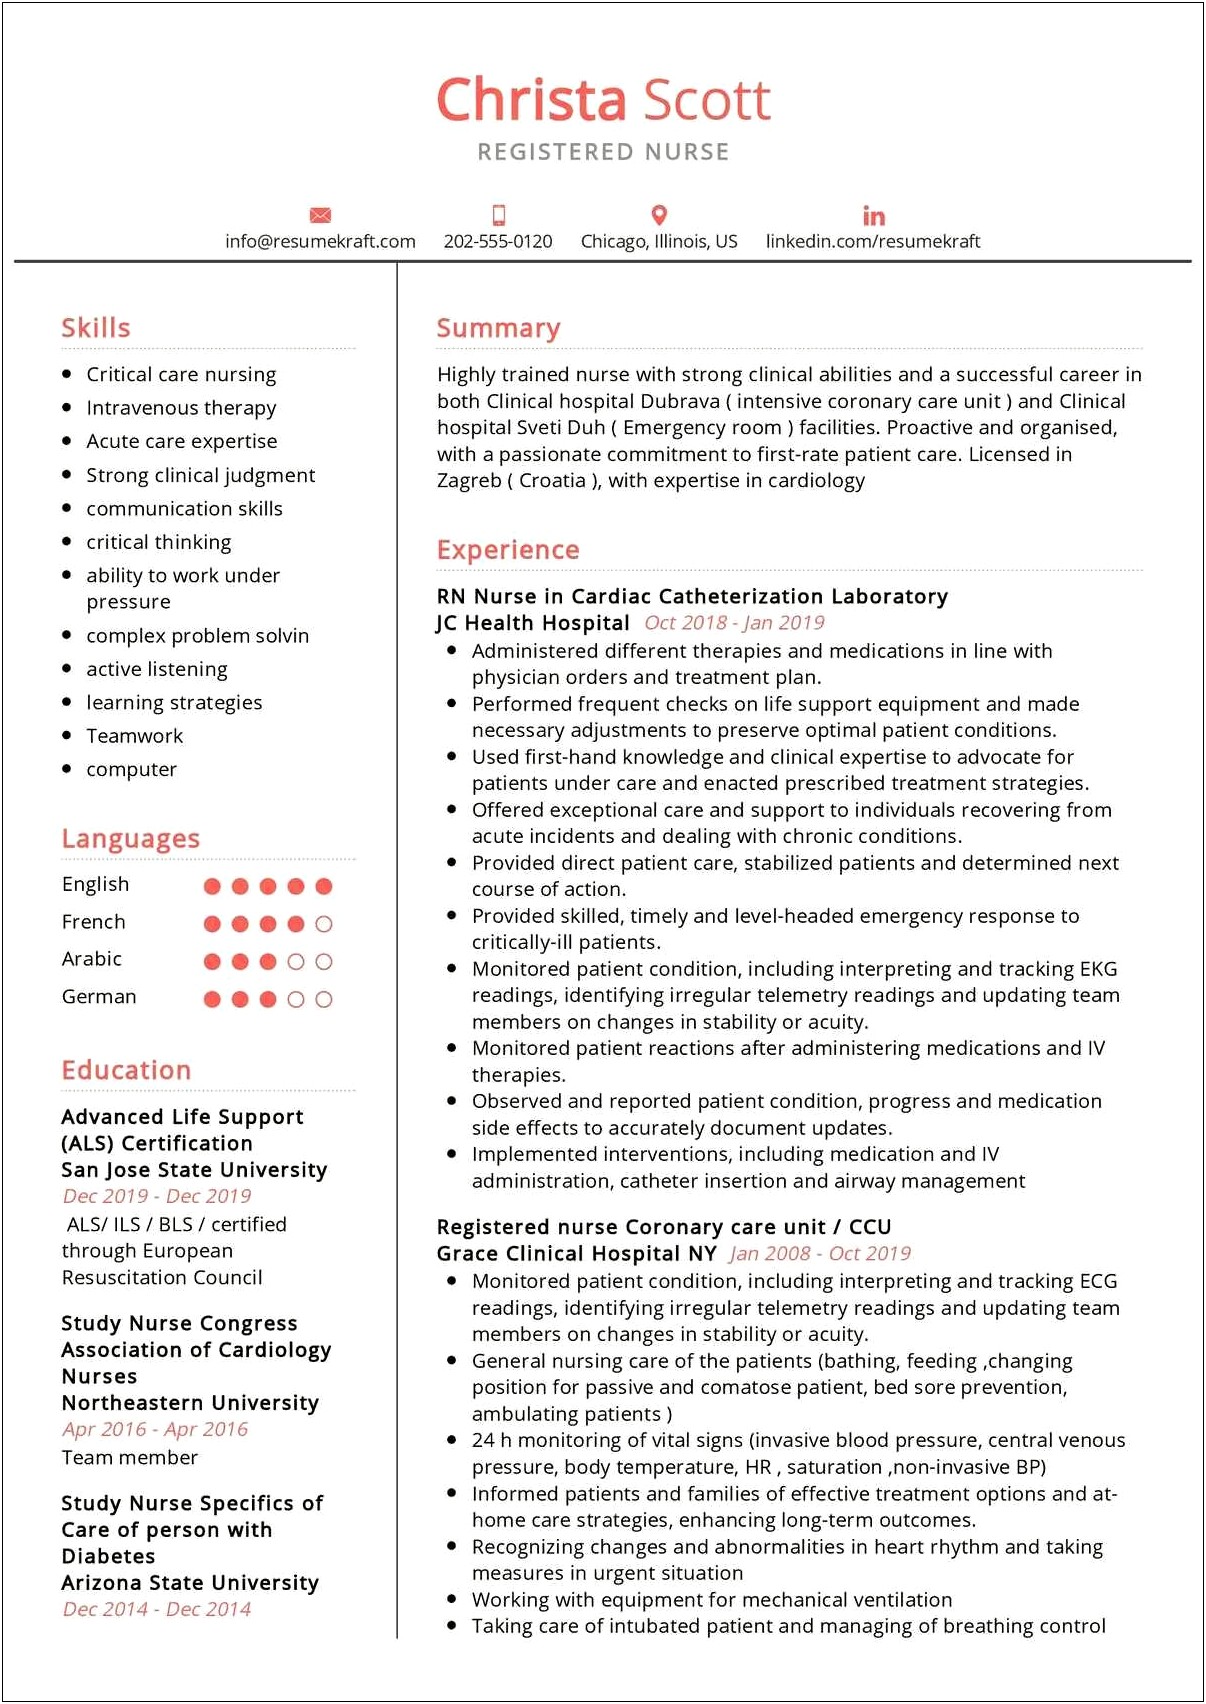 Urgent Care Nurse Job Description For Resume